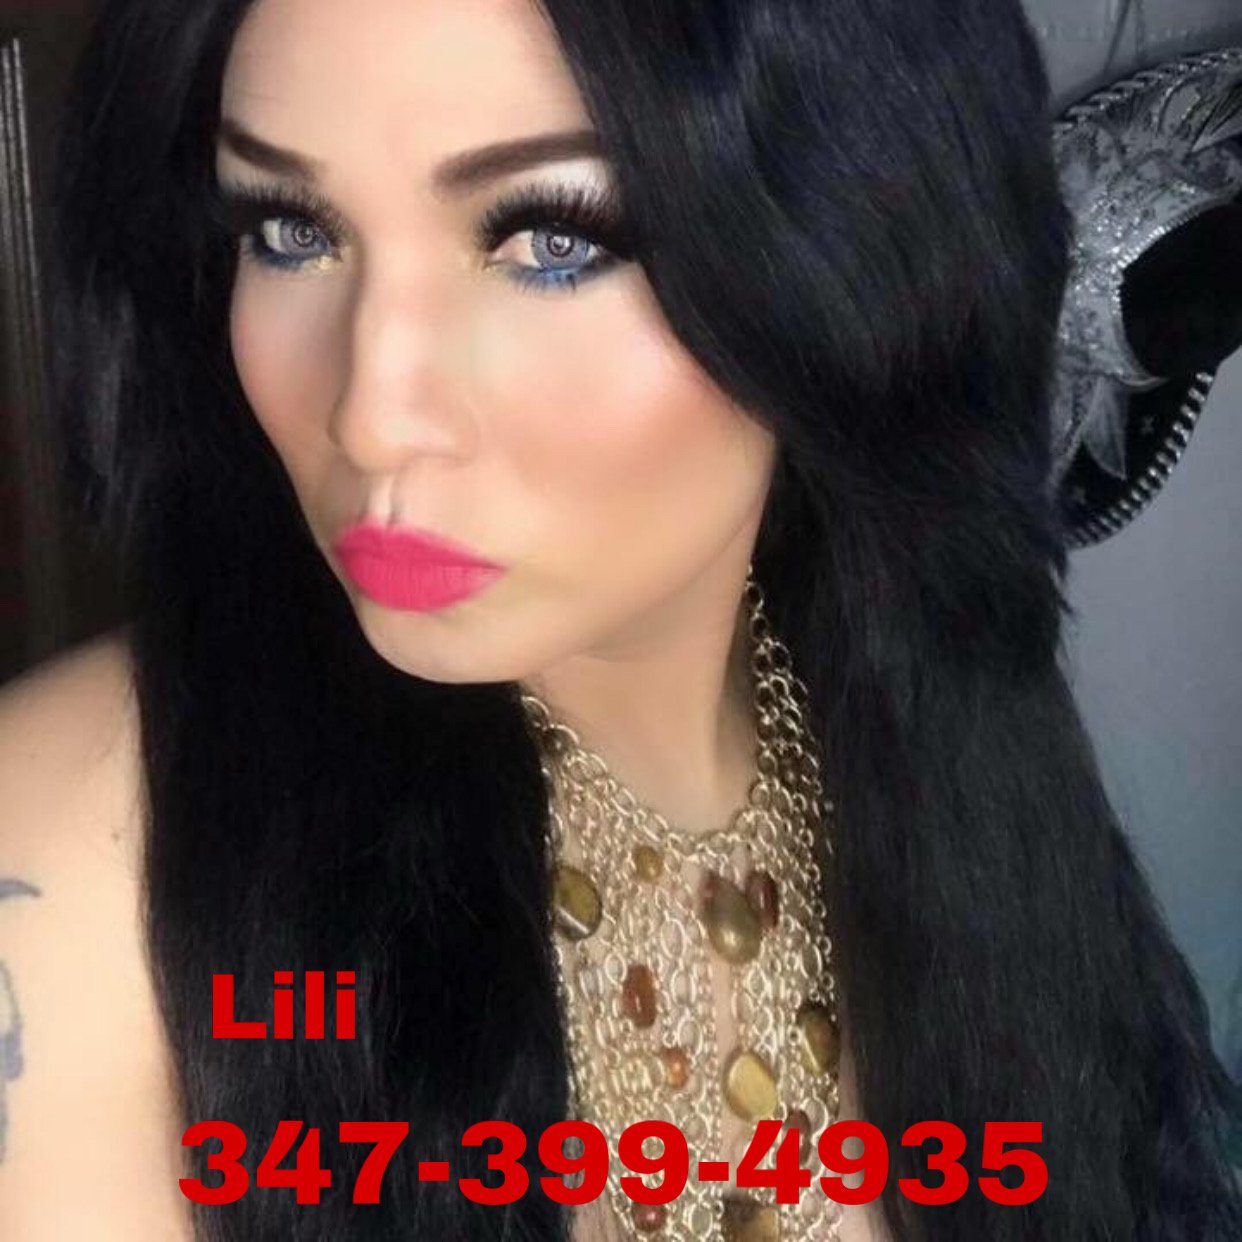 Asian Lily TS Profile, Escort in Washington DC, 3473994935